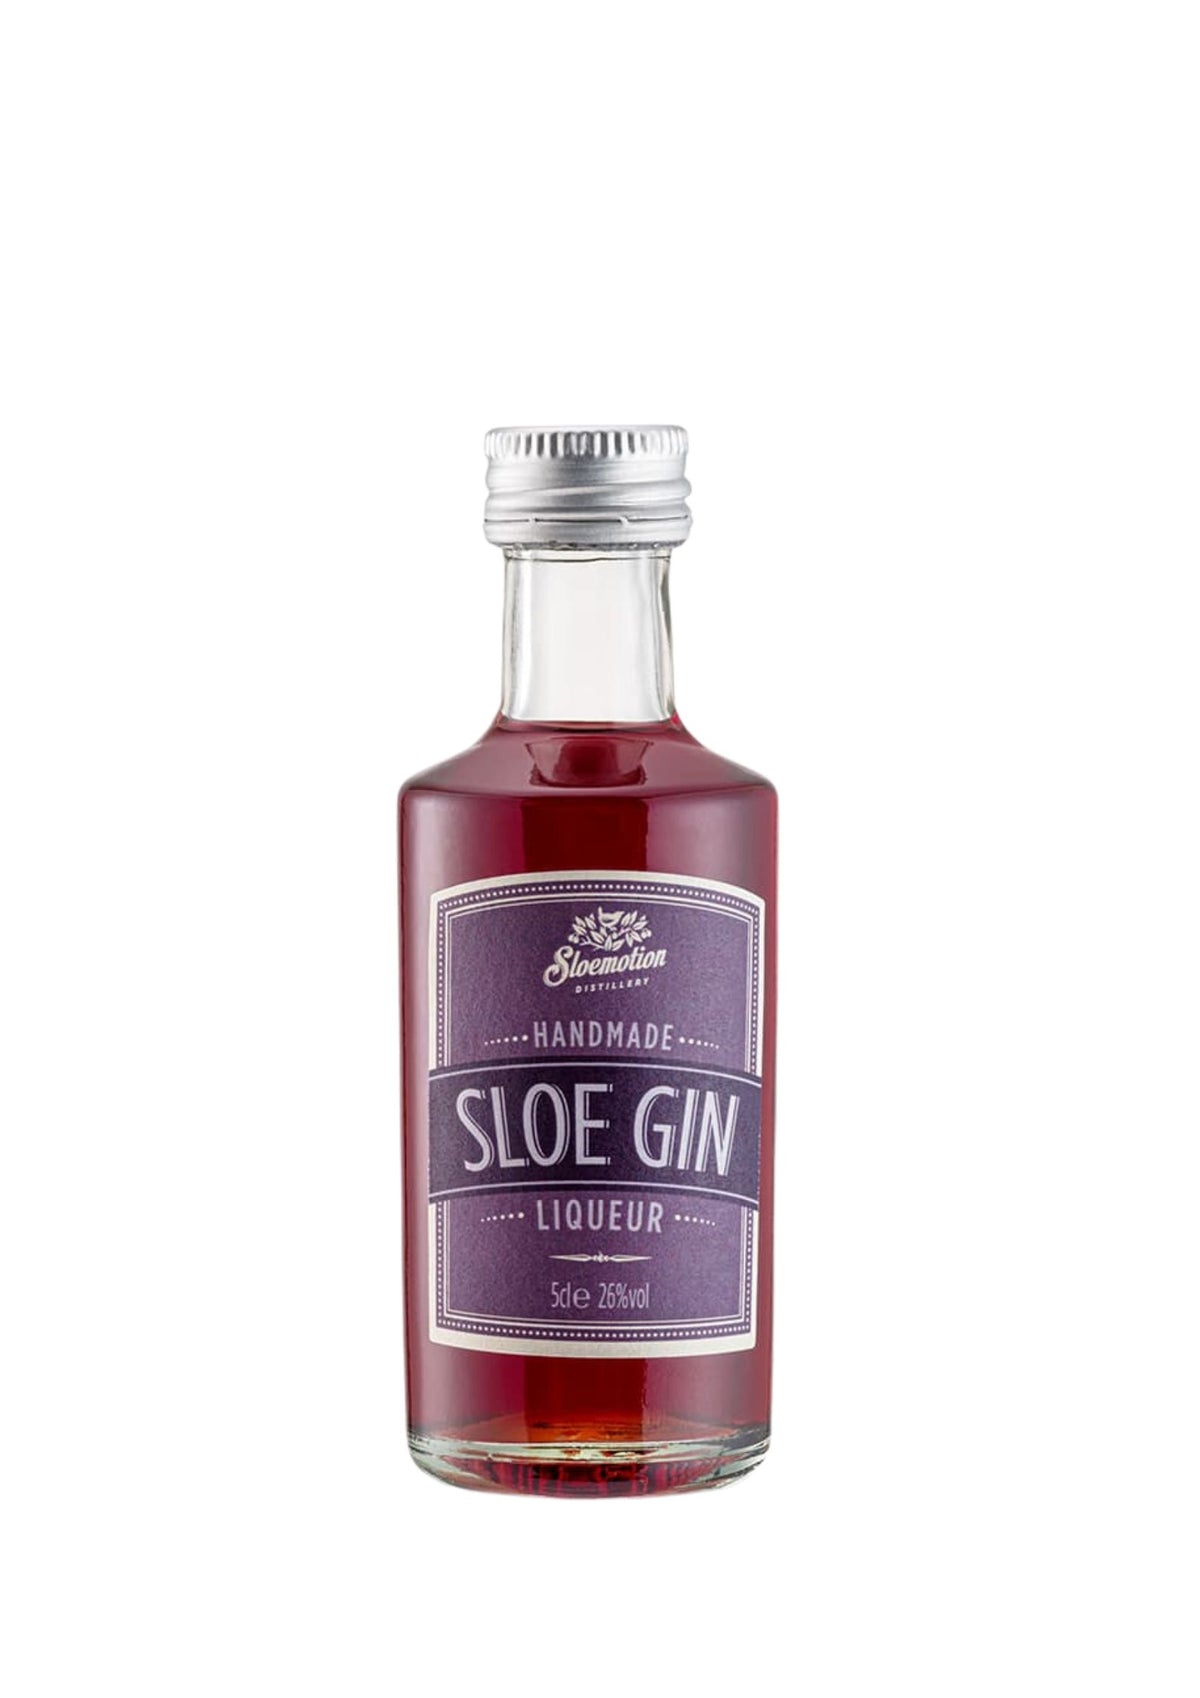 Sloemotion Distillery Sloe Gin Miniature 5cl, 26%